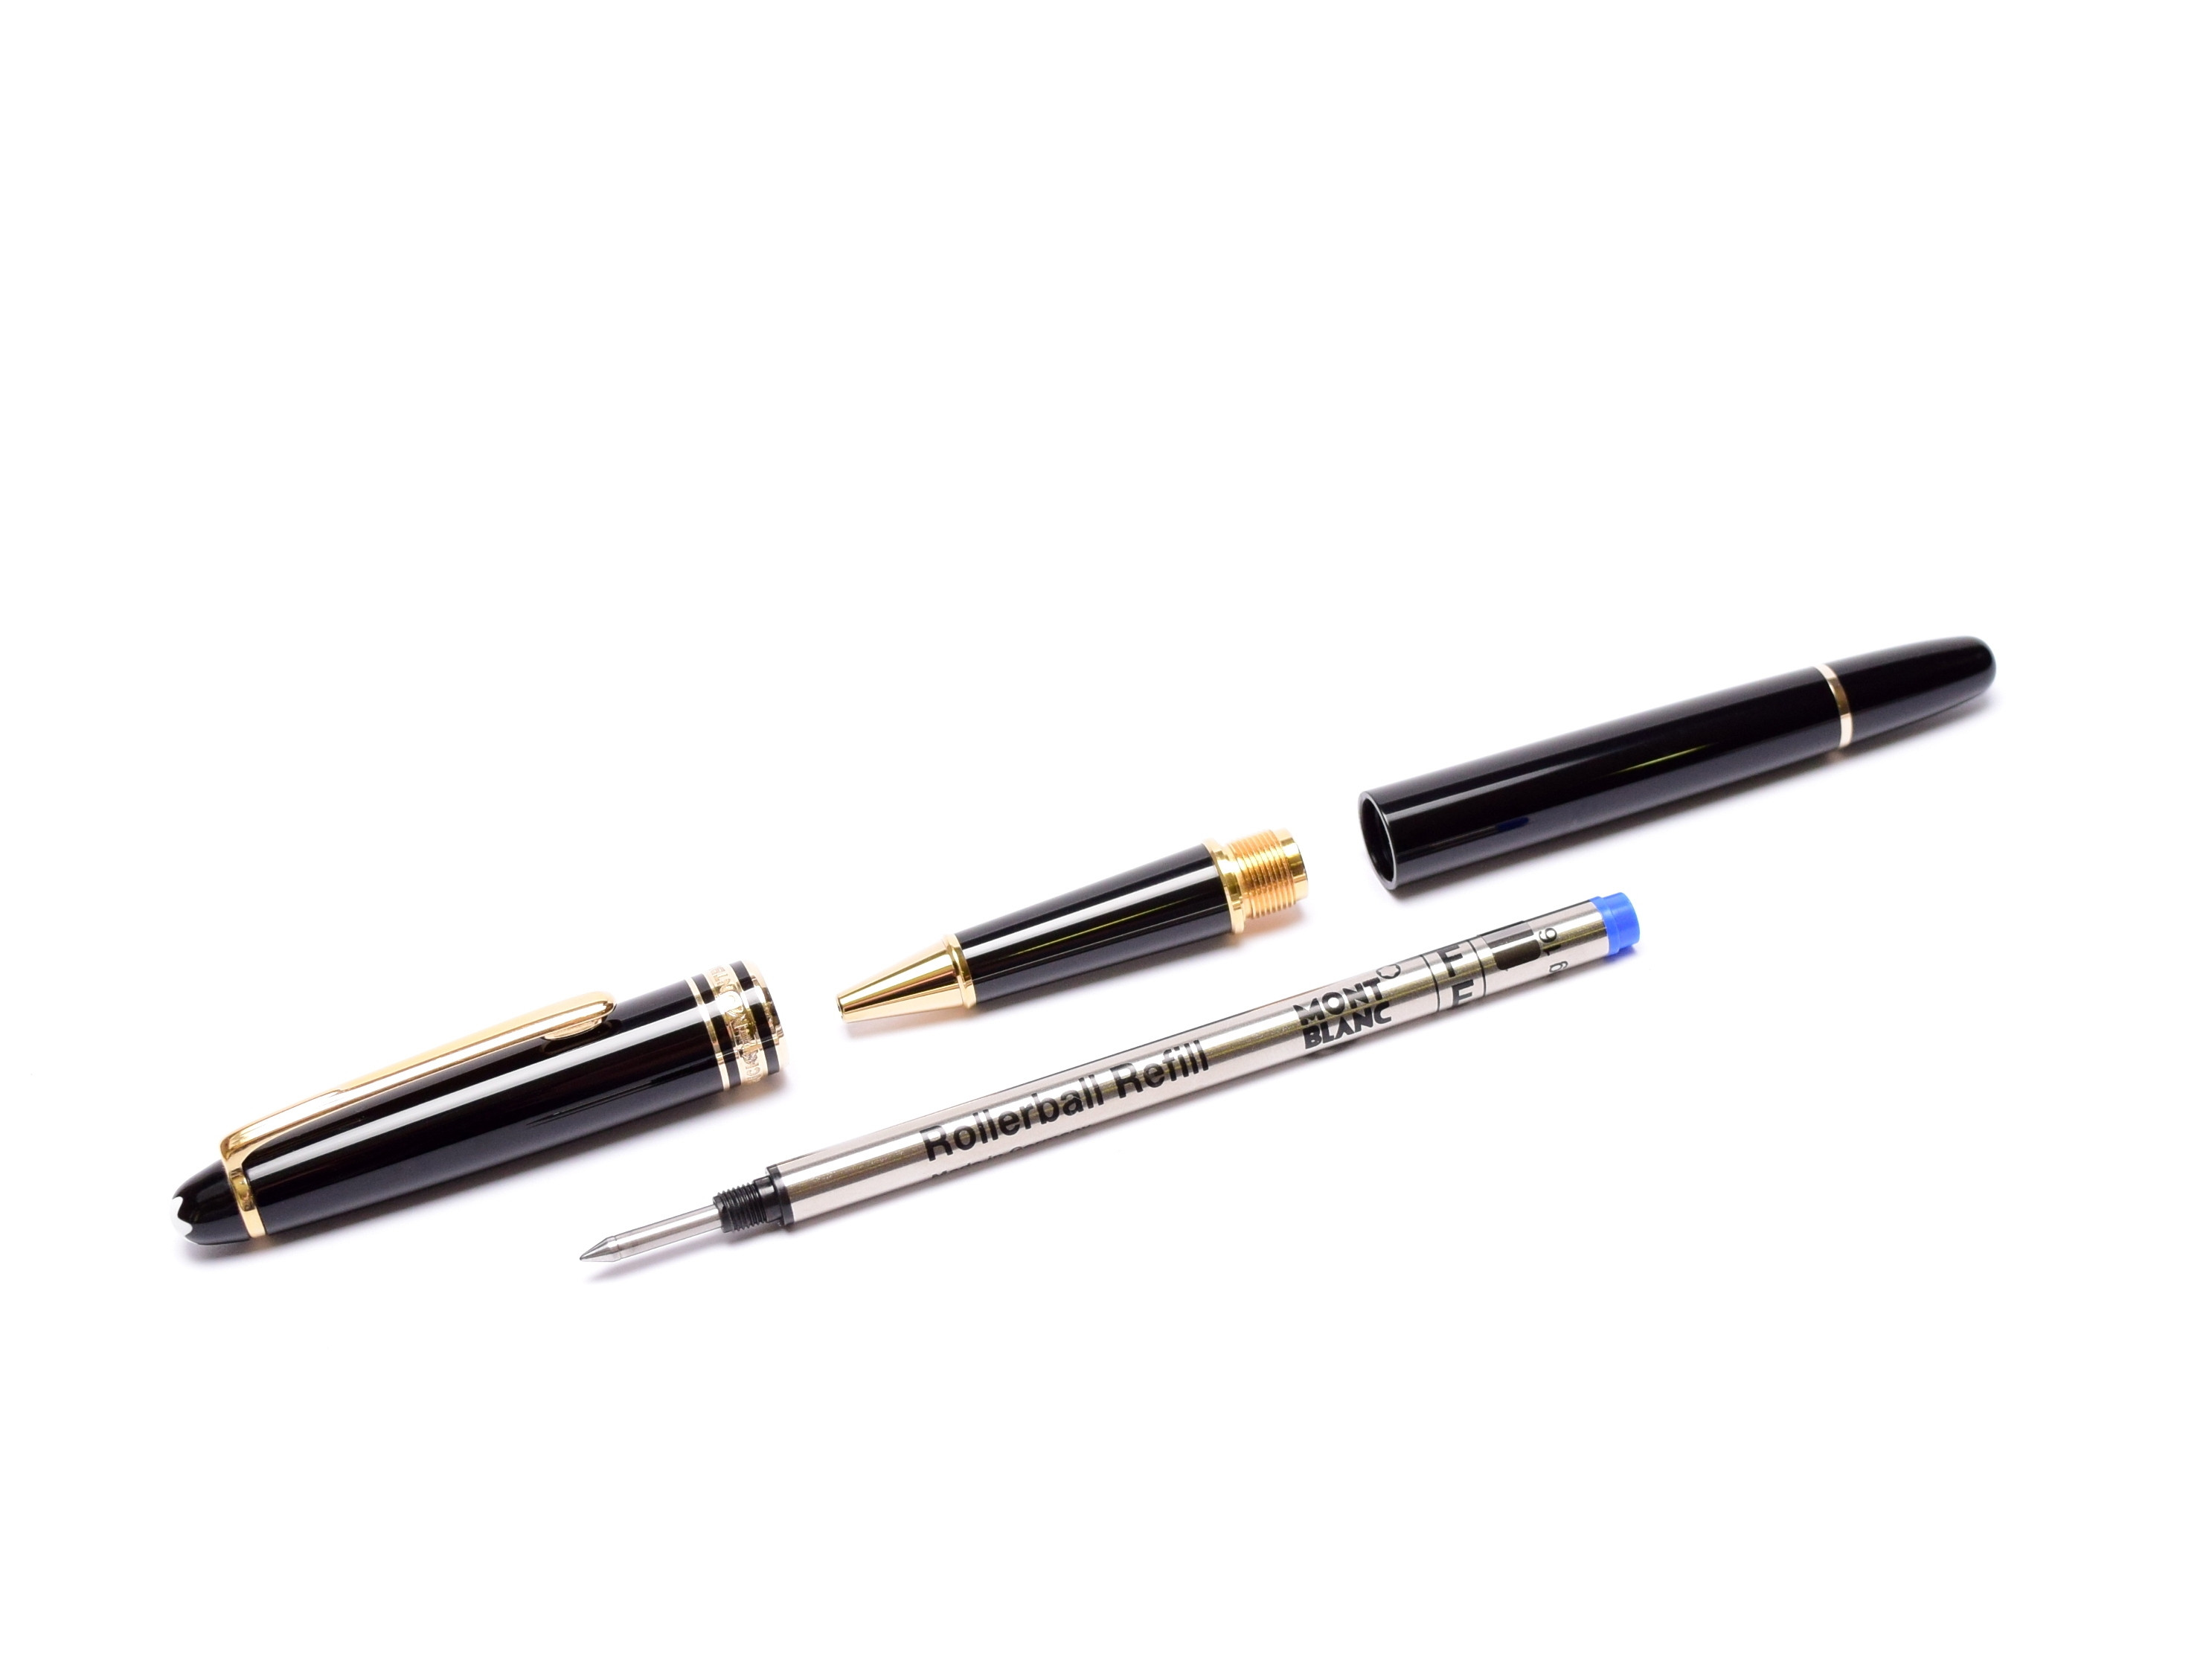 Classic Мeister 163 Ballpoint Pen Design Original Busines Gift Excellent Quality 